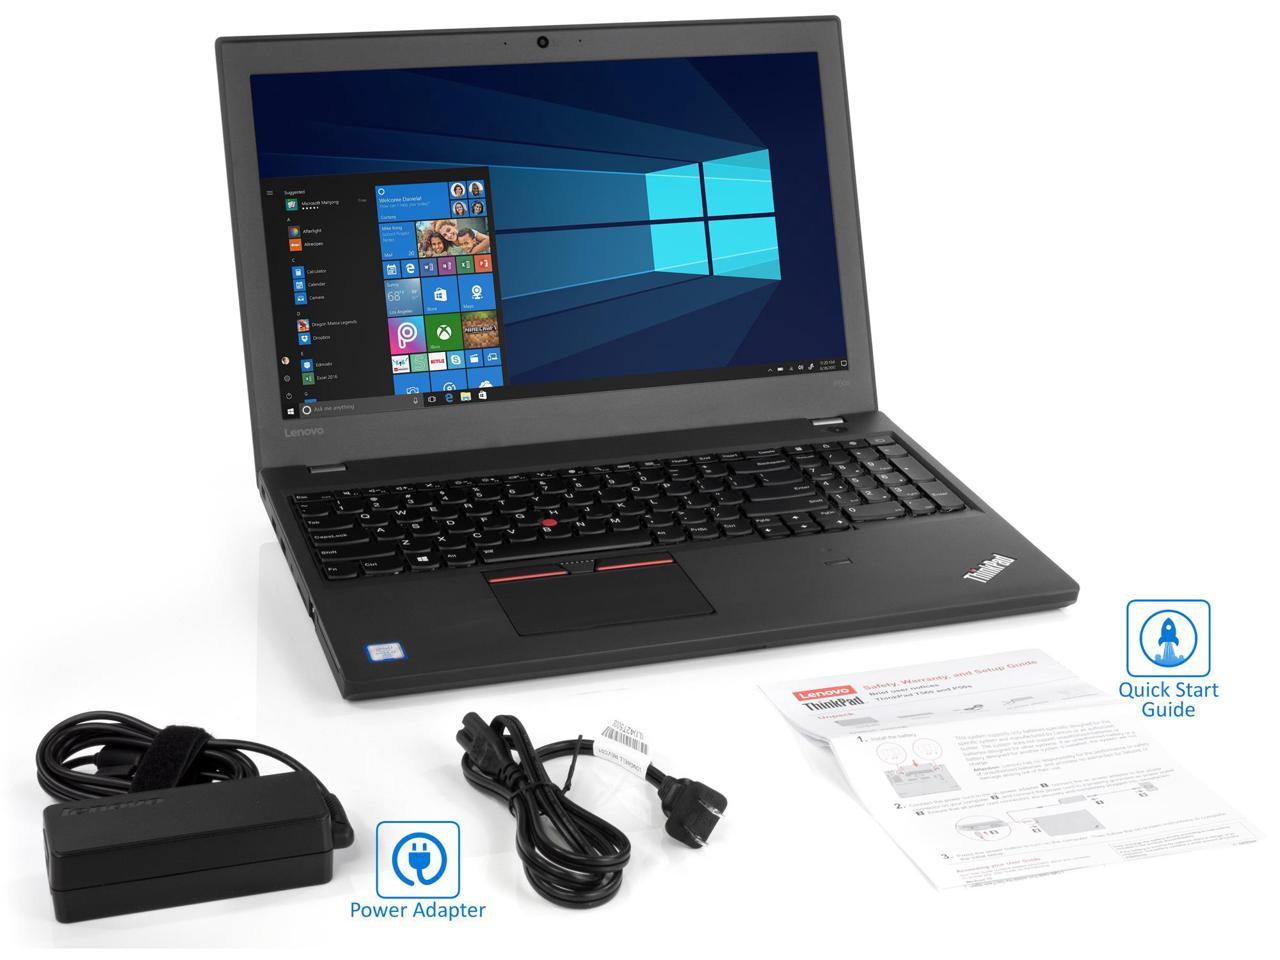 Lenovo Thinkpad P50s Notebook 15 6 Ips Fhd Touchscreen Intel Dual Core I7 6600u Upto 3 4ghz Nvidia Quadro M500m 2gb 16gb Ram 512gb Ssd Card Reader Backlit Keyboard Wi Fi Bt Windows 10 Pro Newegg Com